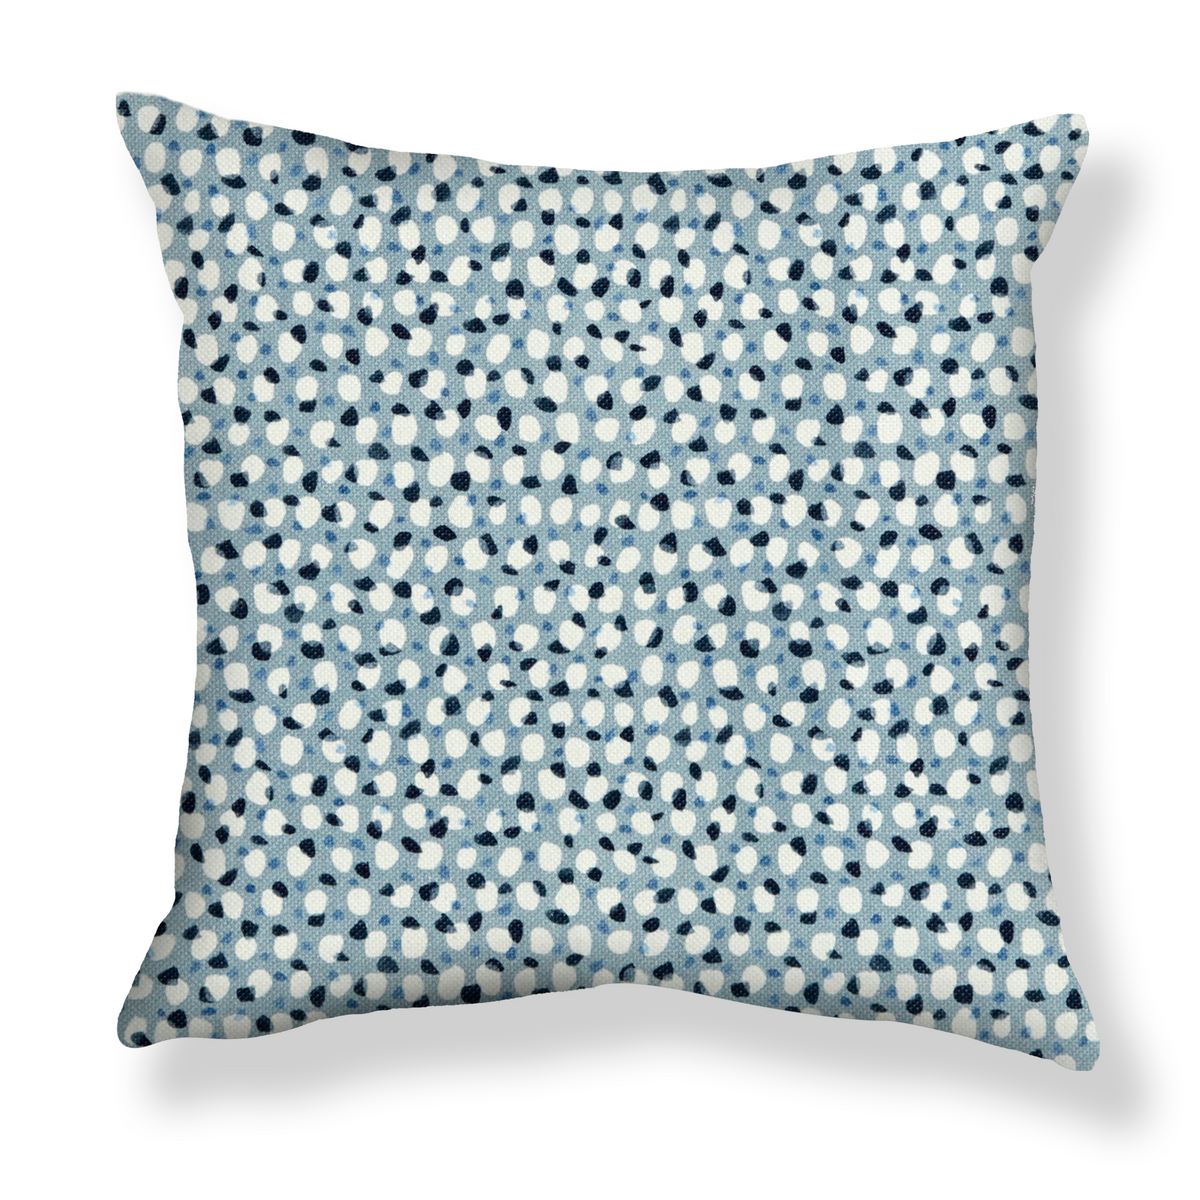 Scattered Dot Pillow in Blue/Navy